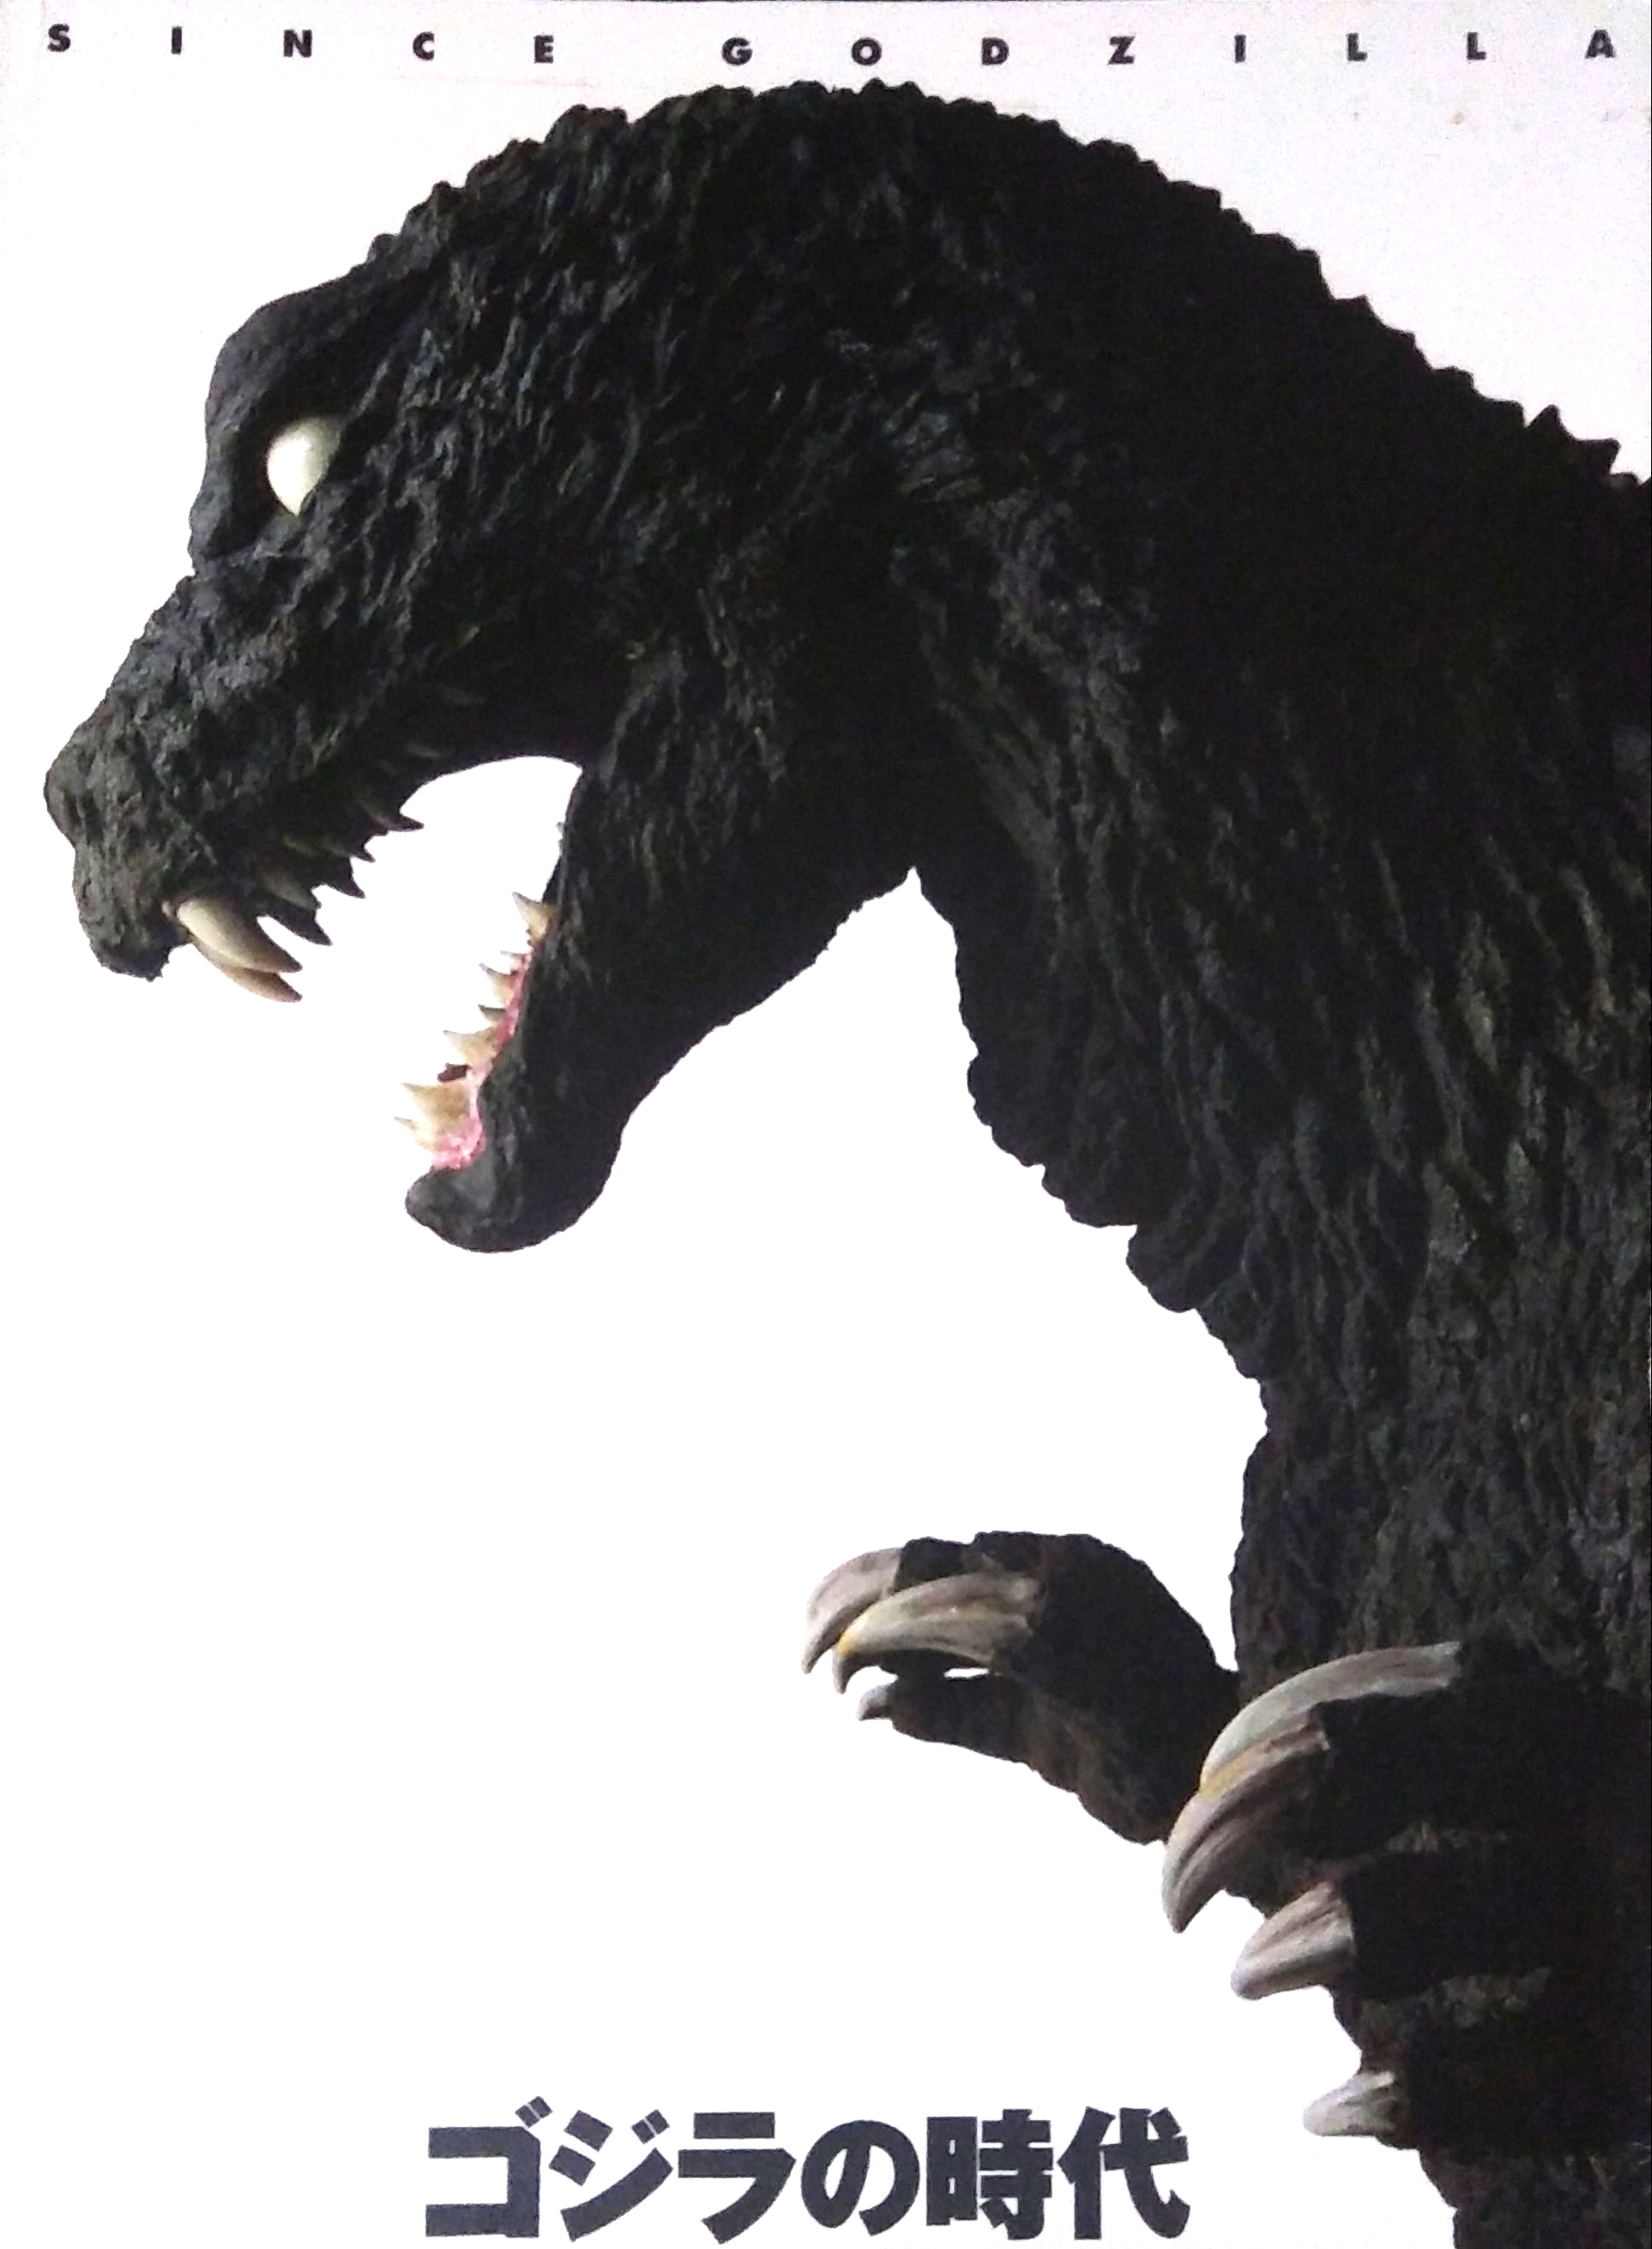 Godzilla' Toho Tokusatsu Unpublished Material archive Book 'Producer  Tomoyuki